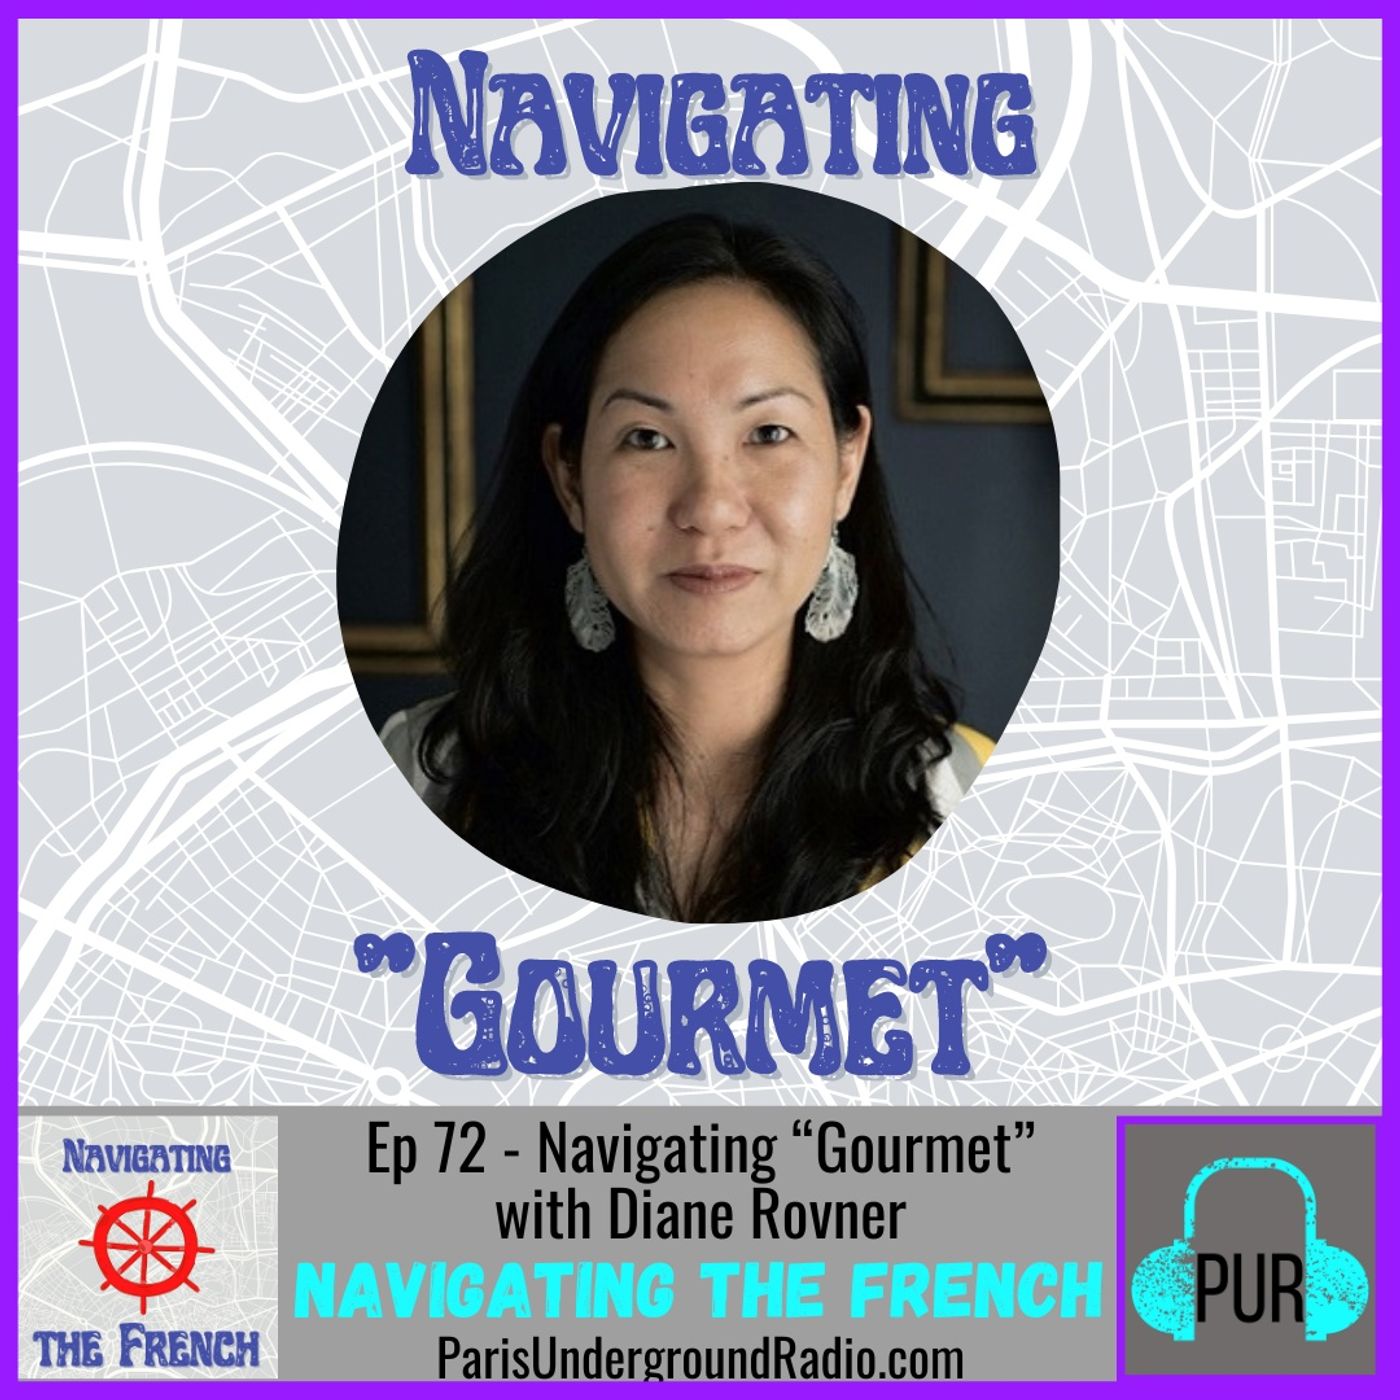 Ep 72 - Navigating “Gourmet” with Diane Rovner